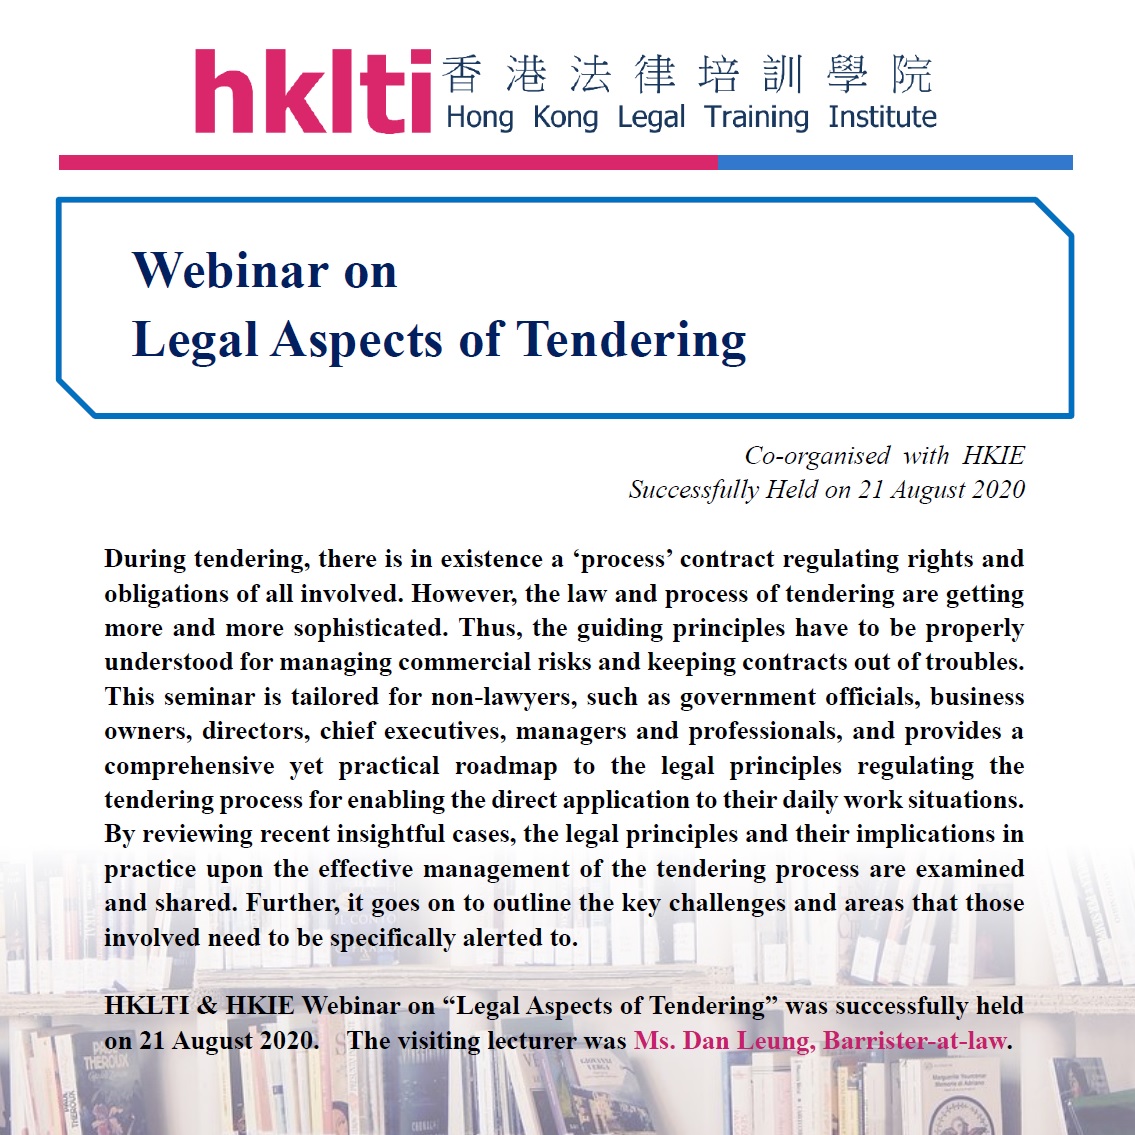 hklti hkie webinar legal aspects of tendering seminar report 20200821